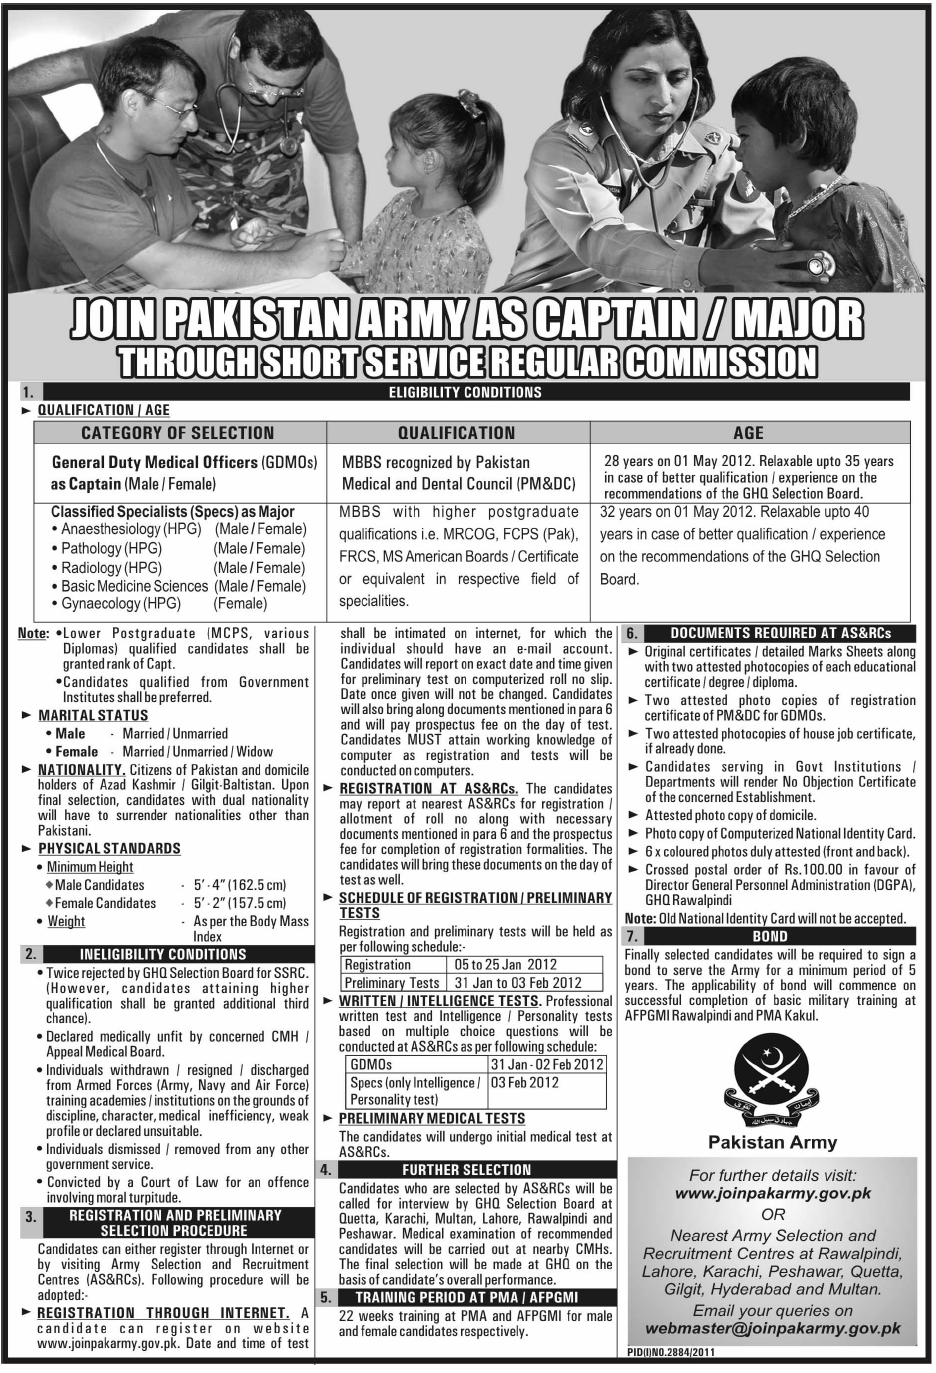 Join Pakistan Army as Captain/Major Through Short Service Regular Commission